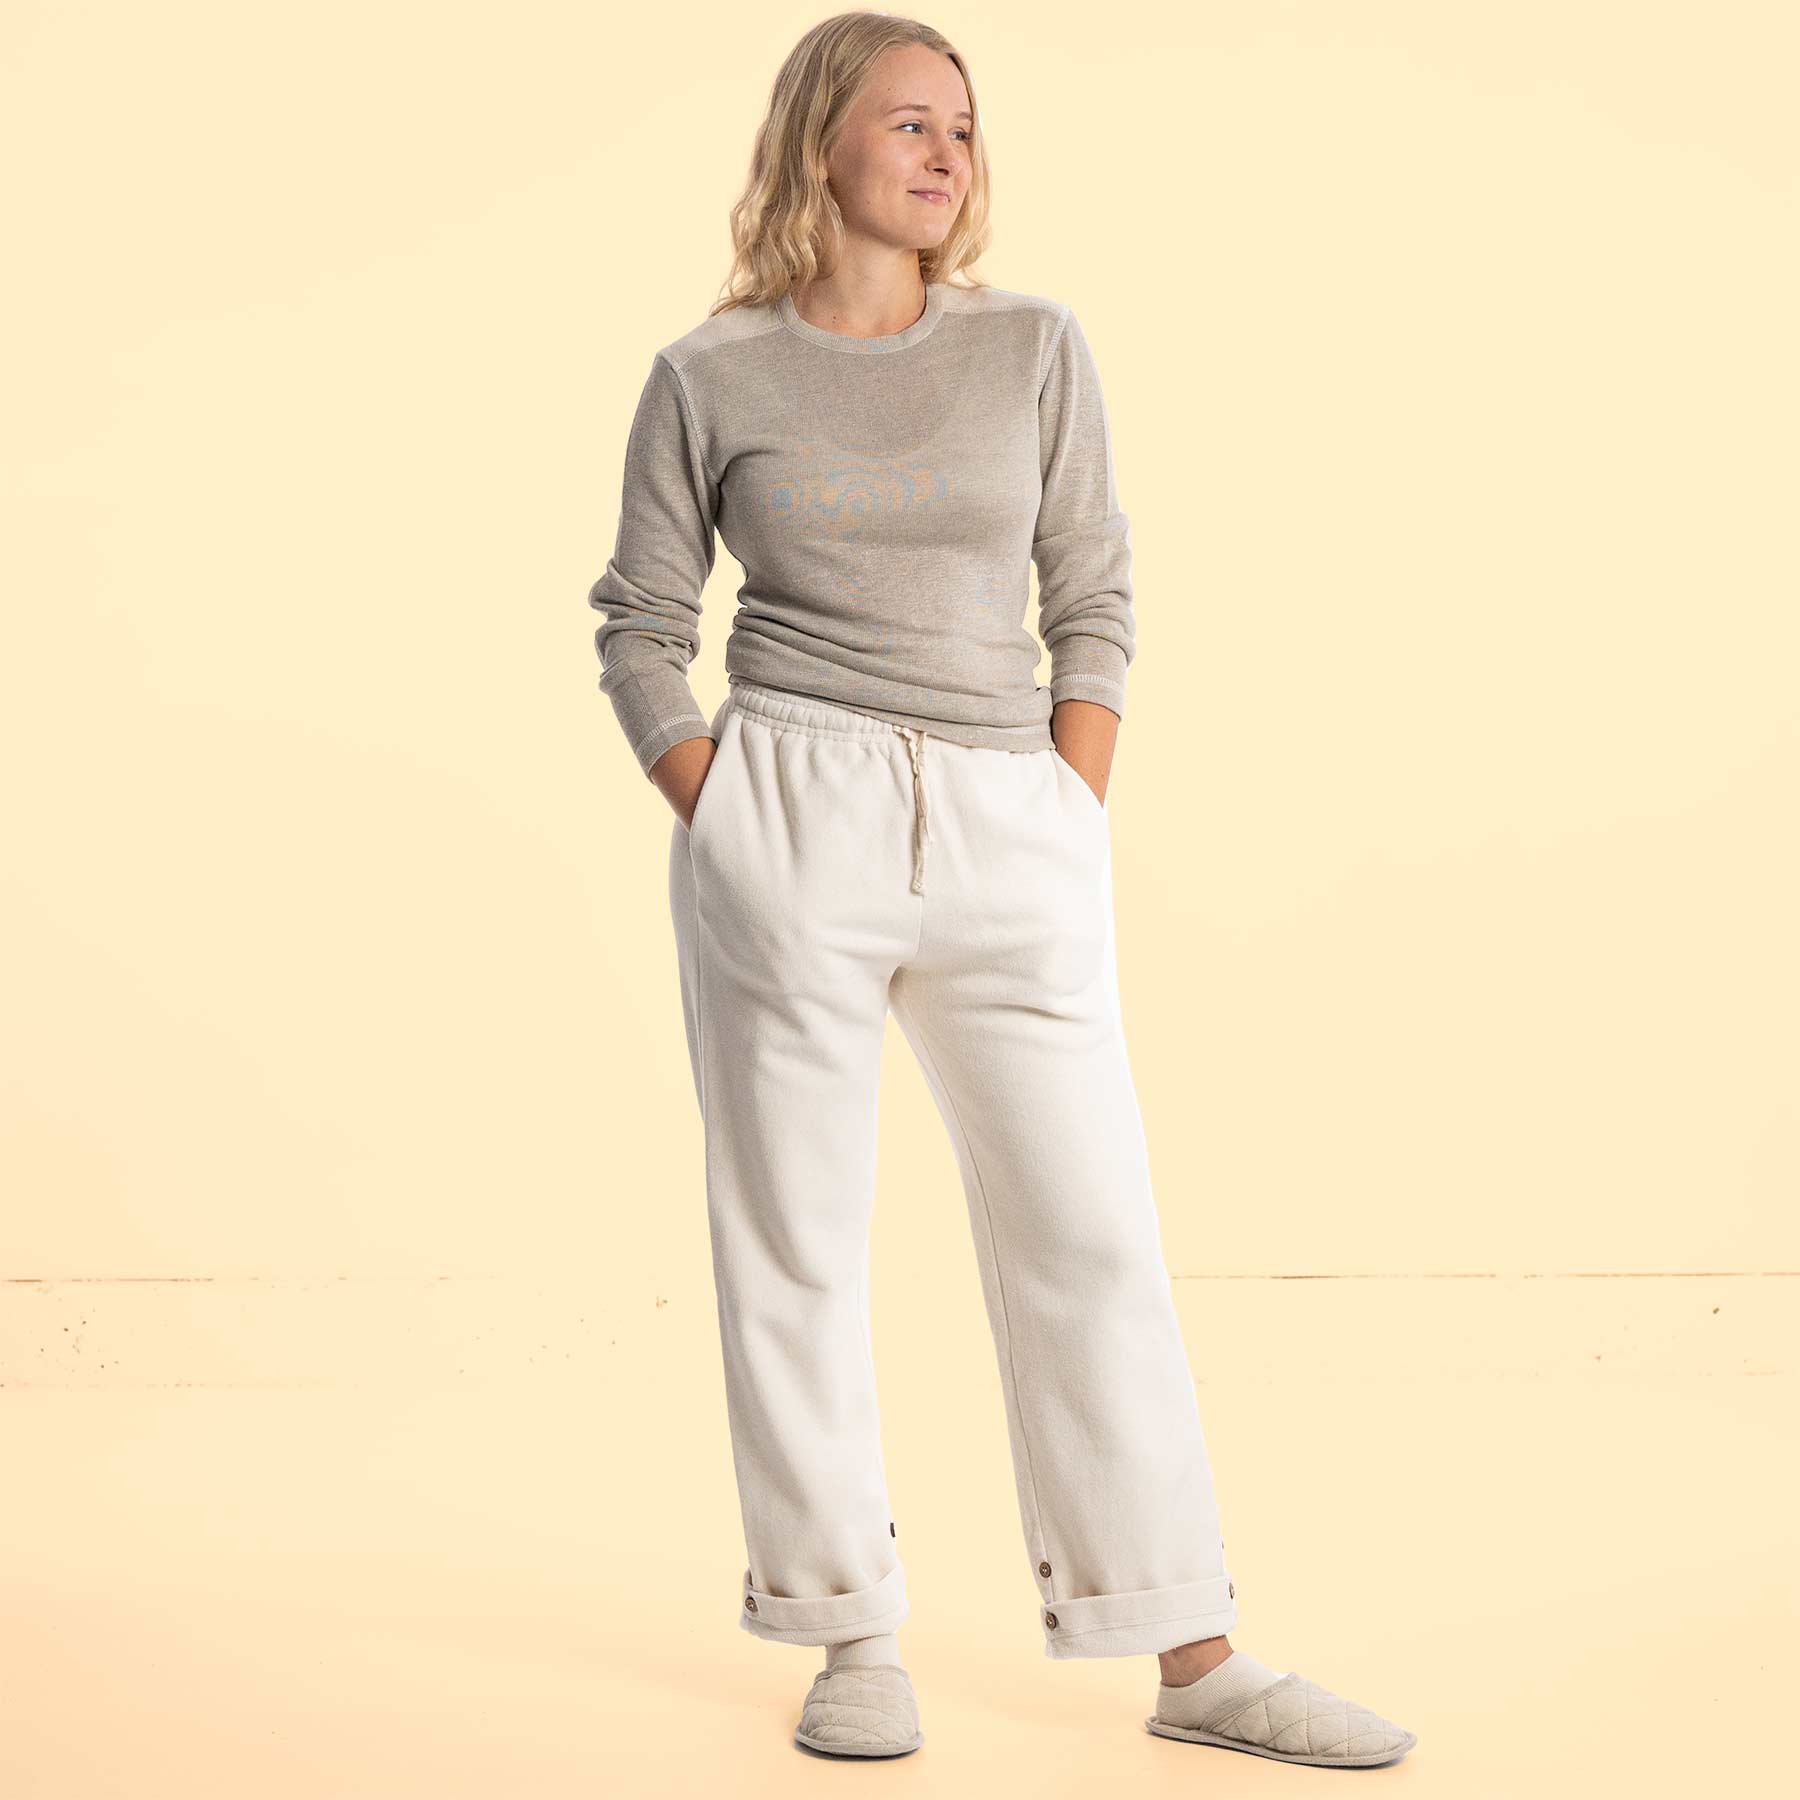 Women's Blended Cotton Sweatpants - Women's Pants & Leggings - New